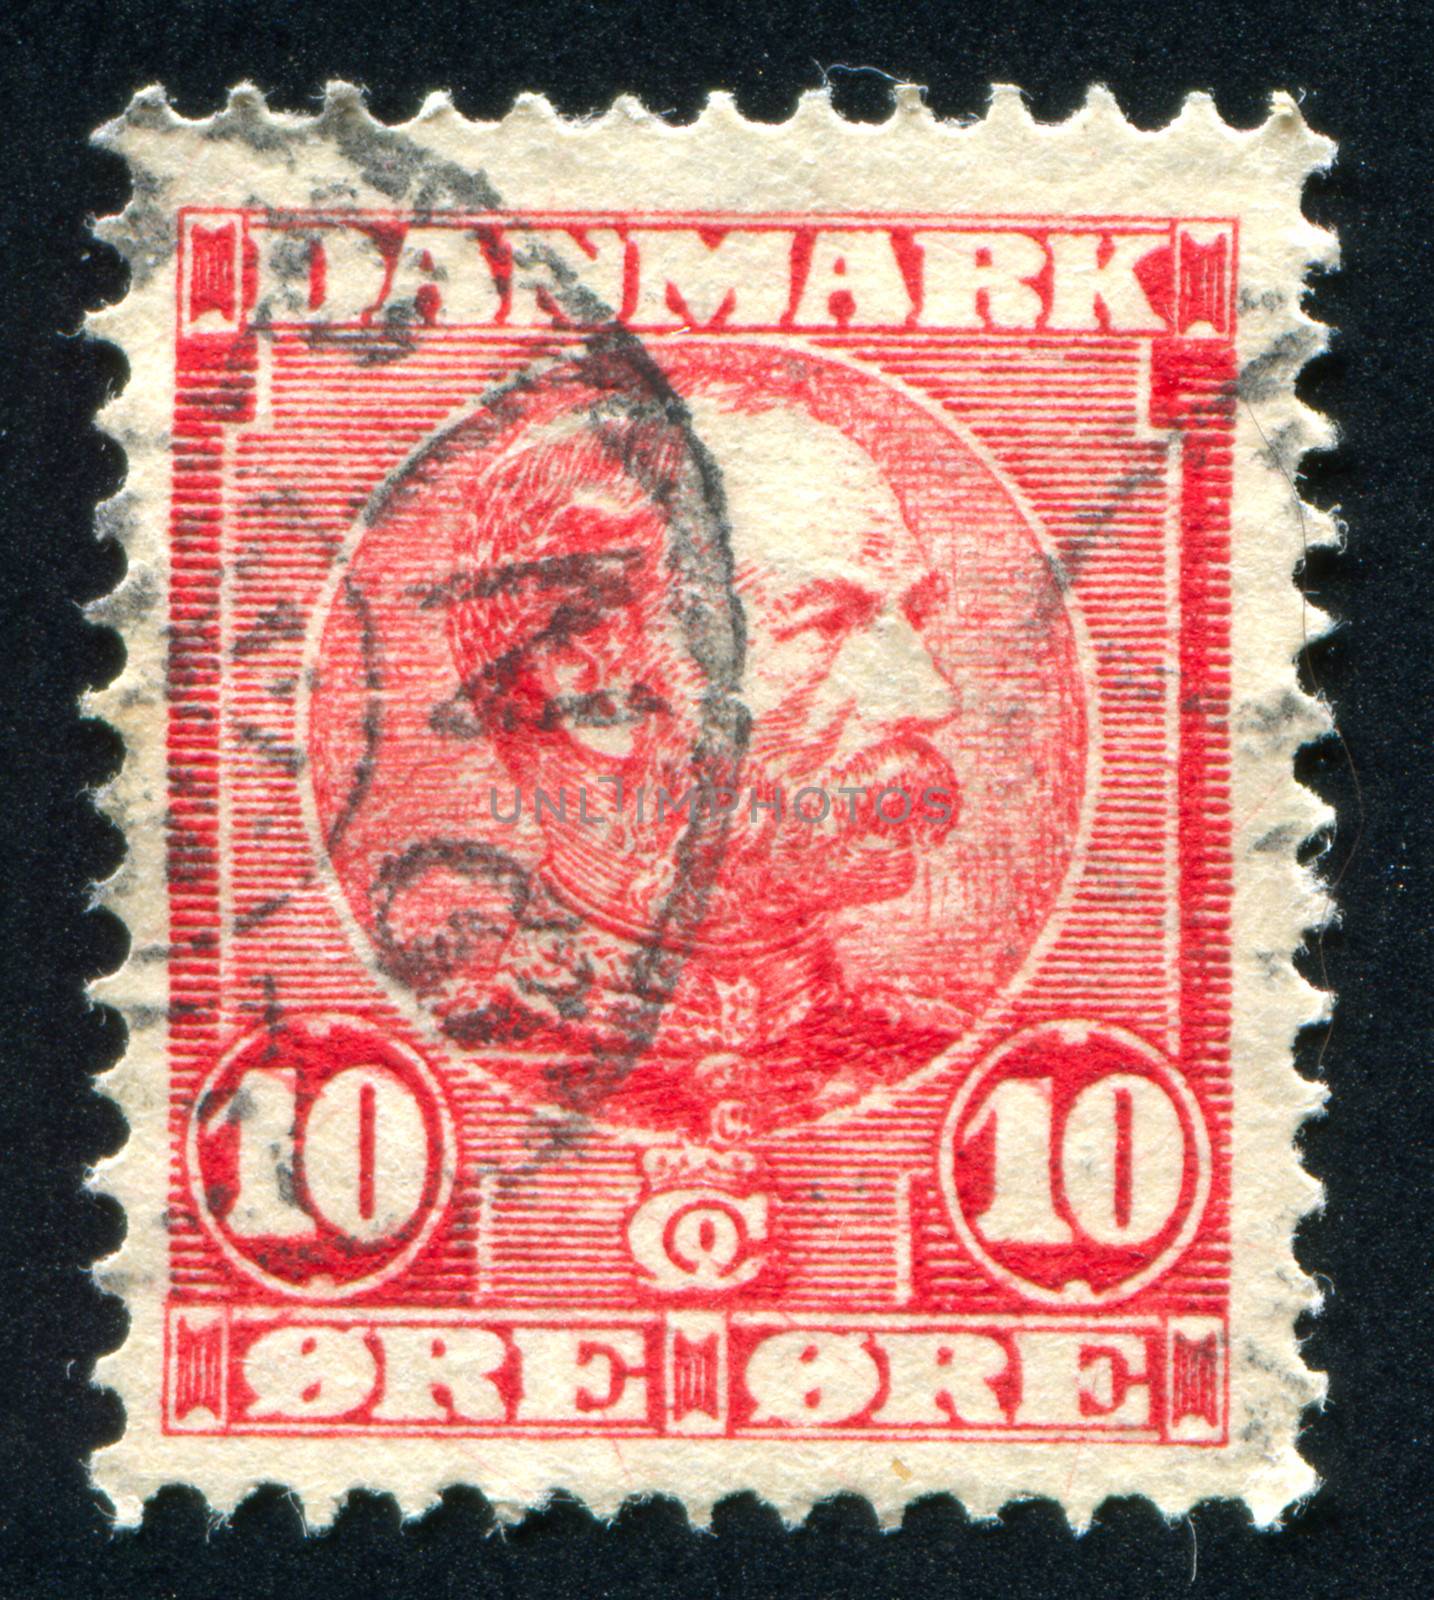 DENMARK - CIRCA 1904: stamp printed by Denmark, shows King Christian IX, circa 1904